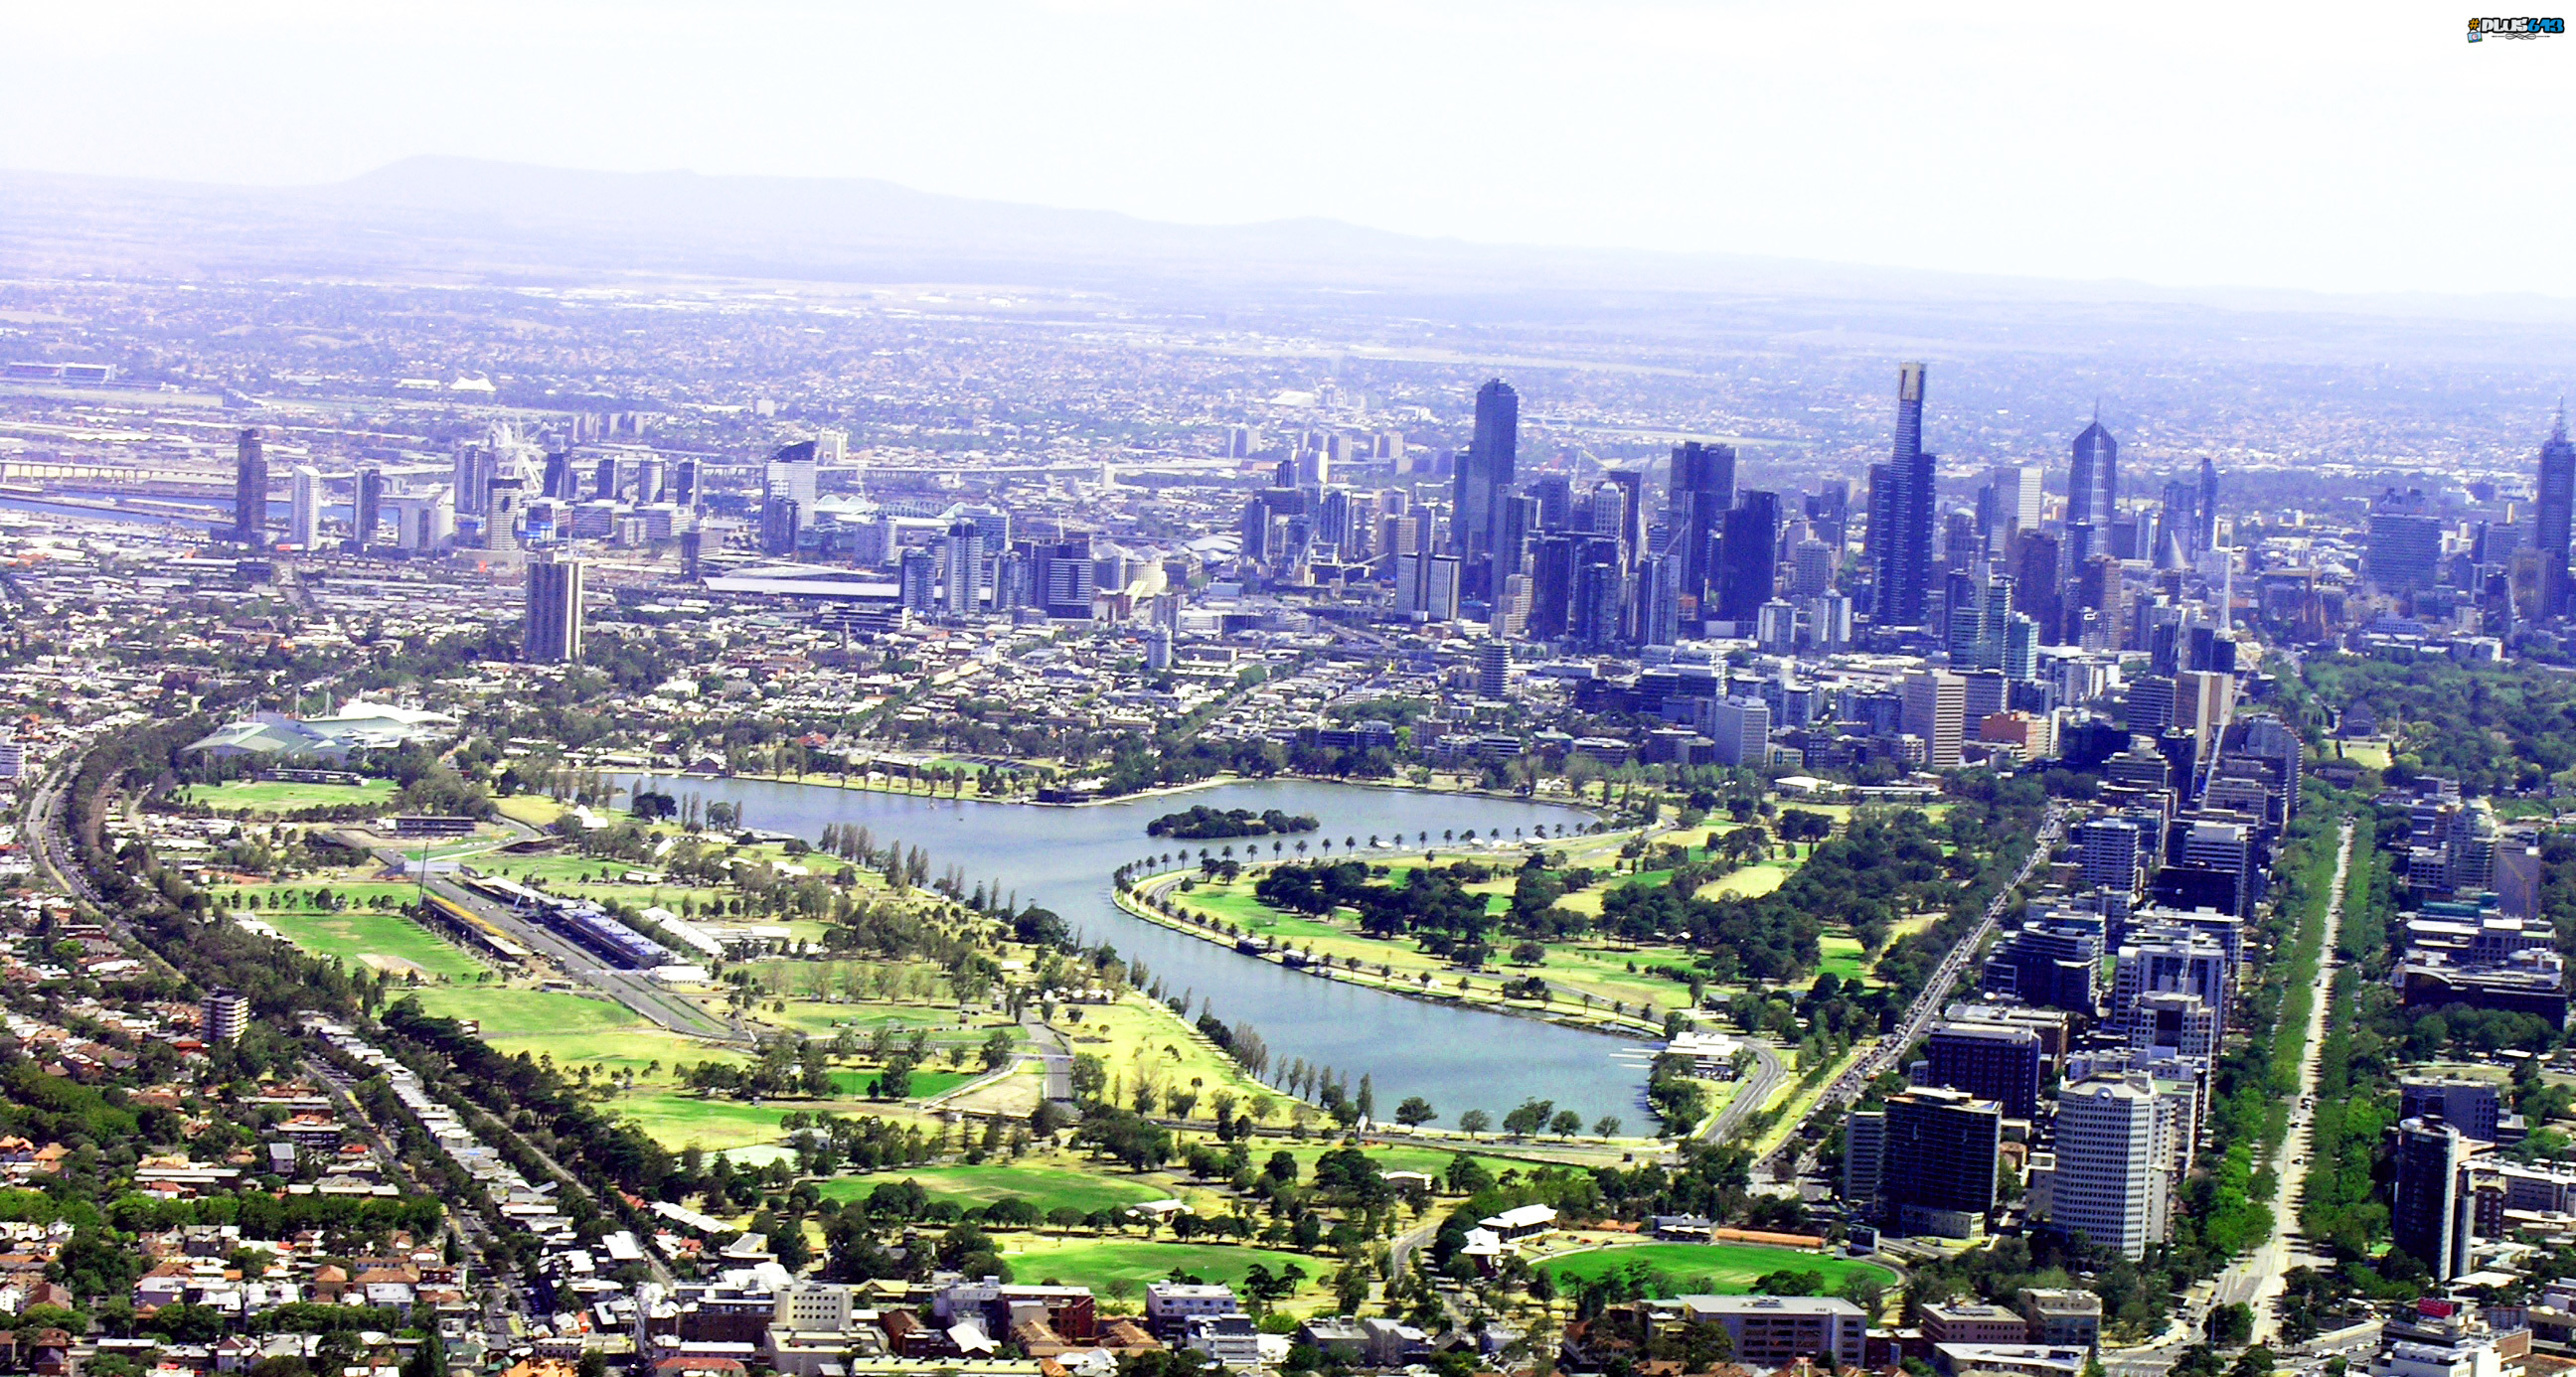 Melbourne, Australia from Albert Park (site of Australian F1 Grand Prix)